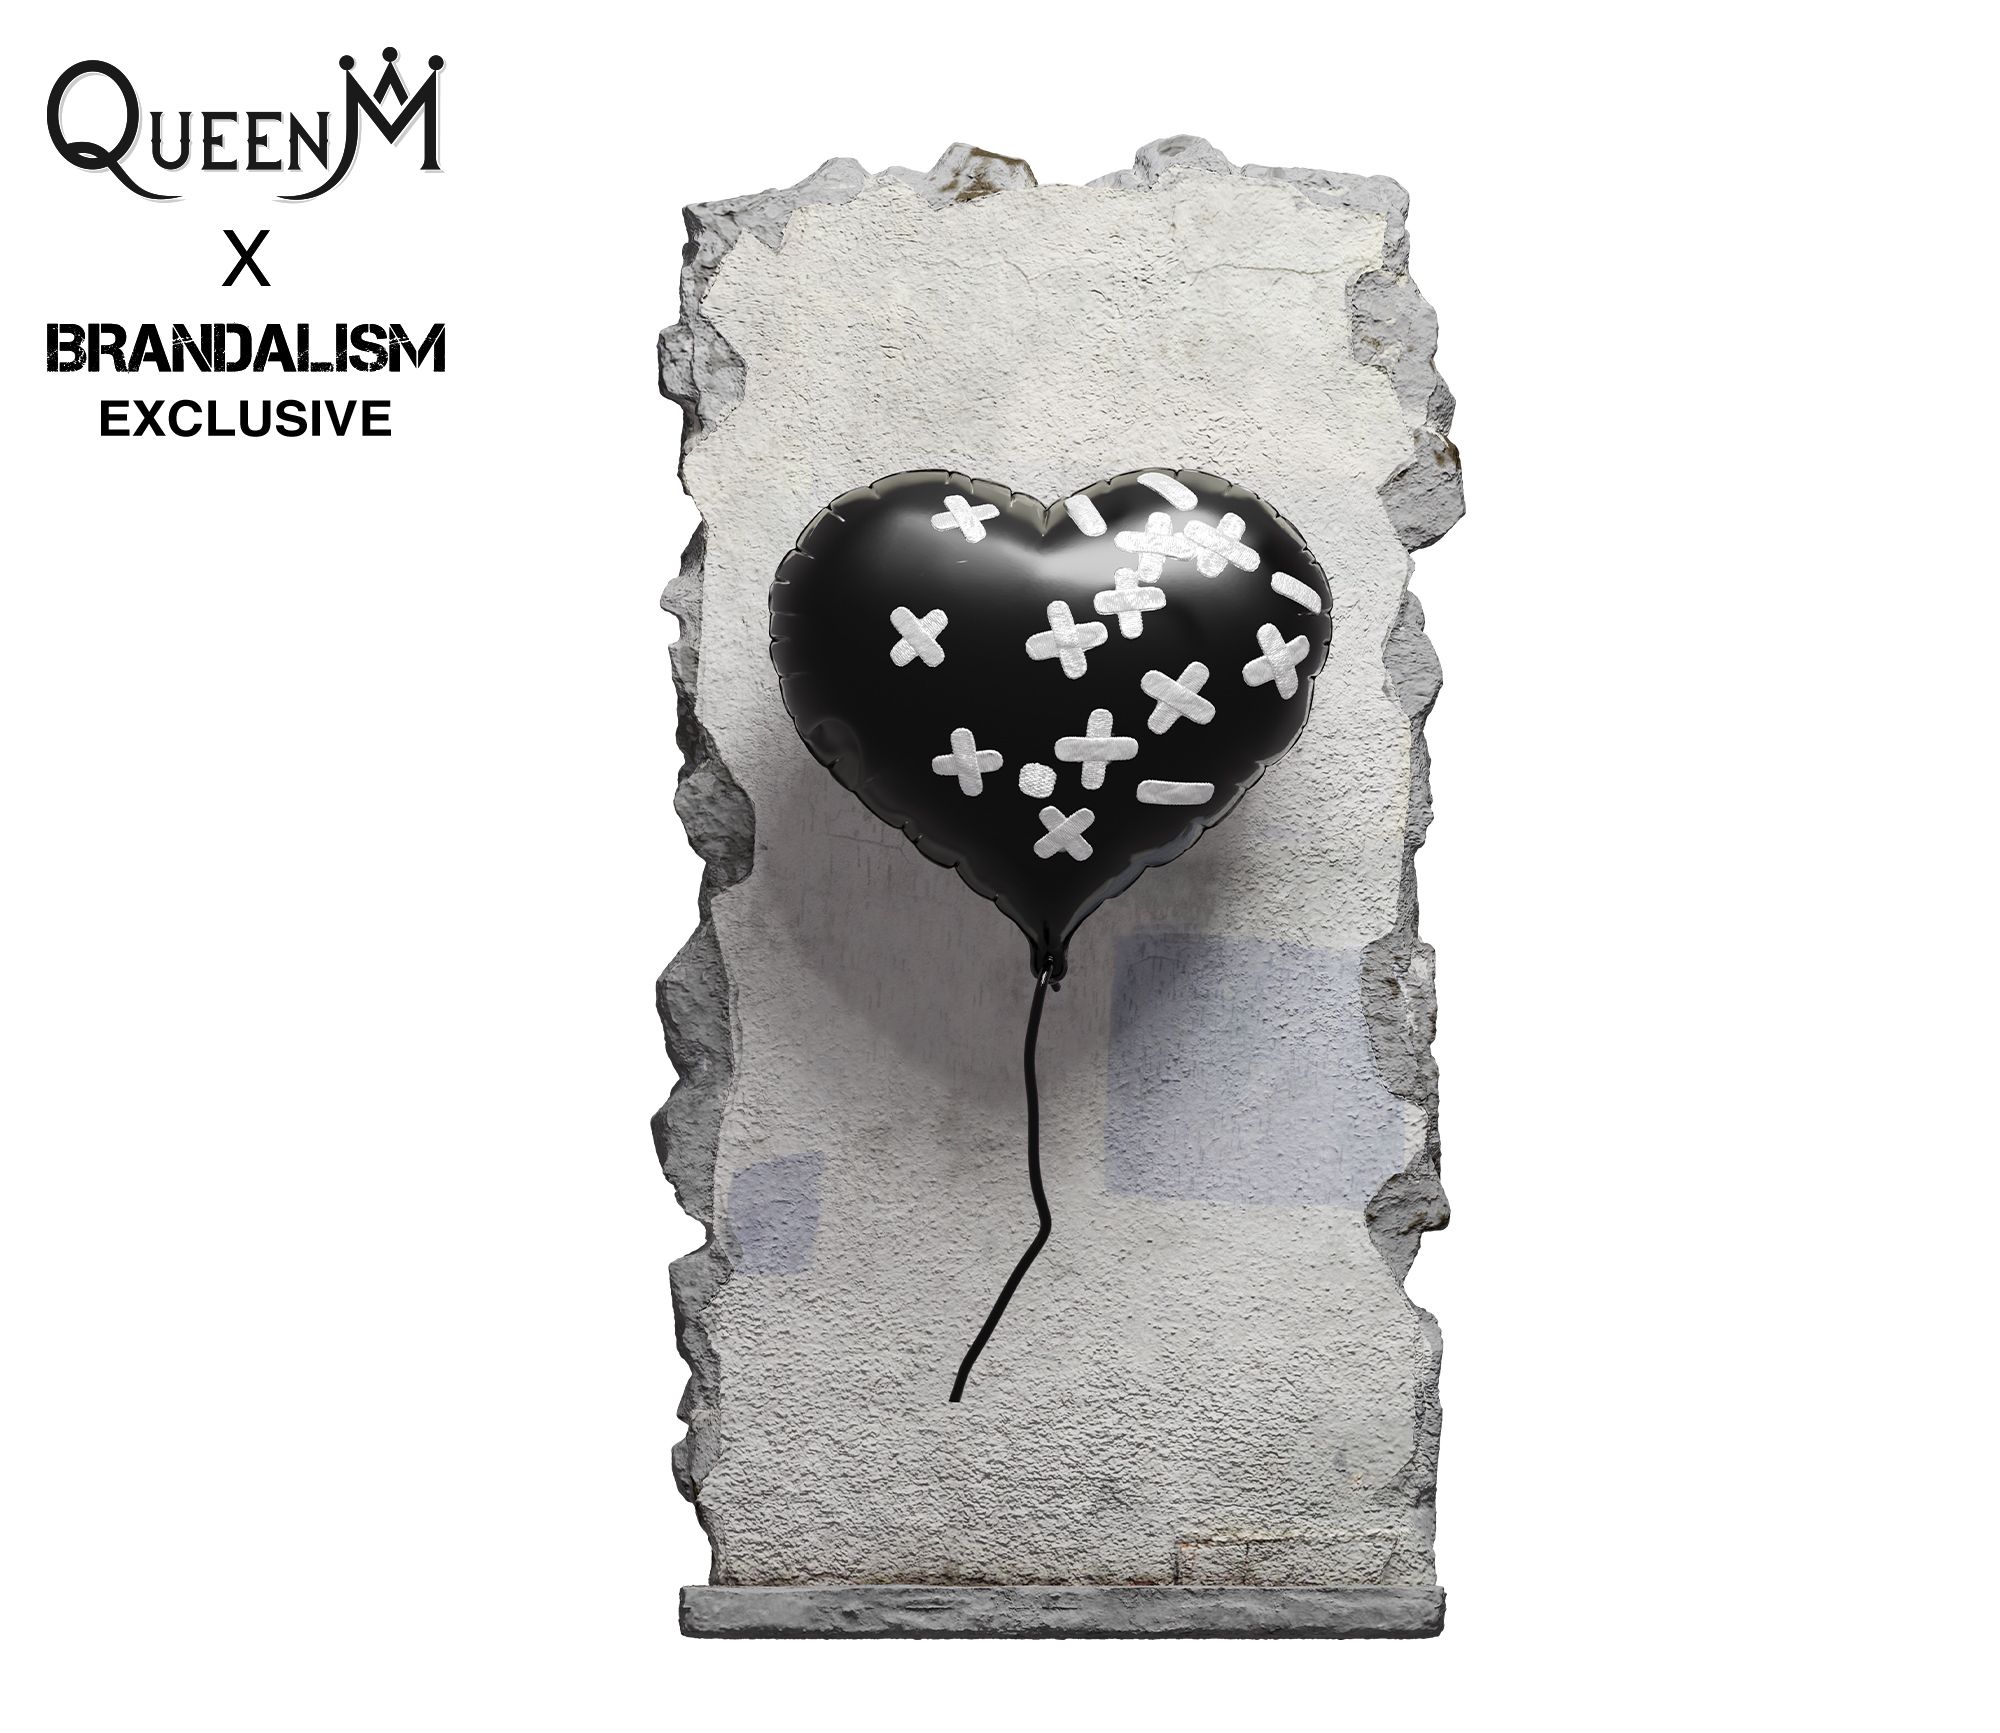 Bandaged-Heart Banksy Queen M figure